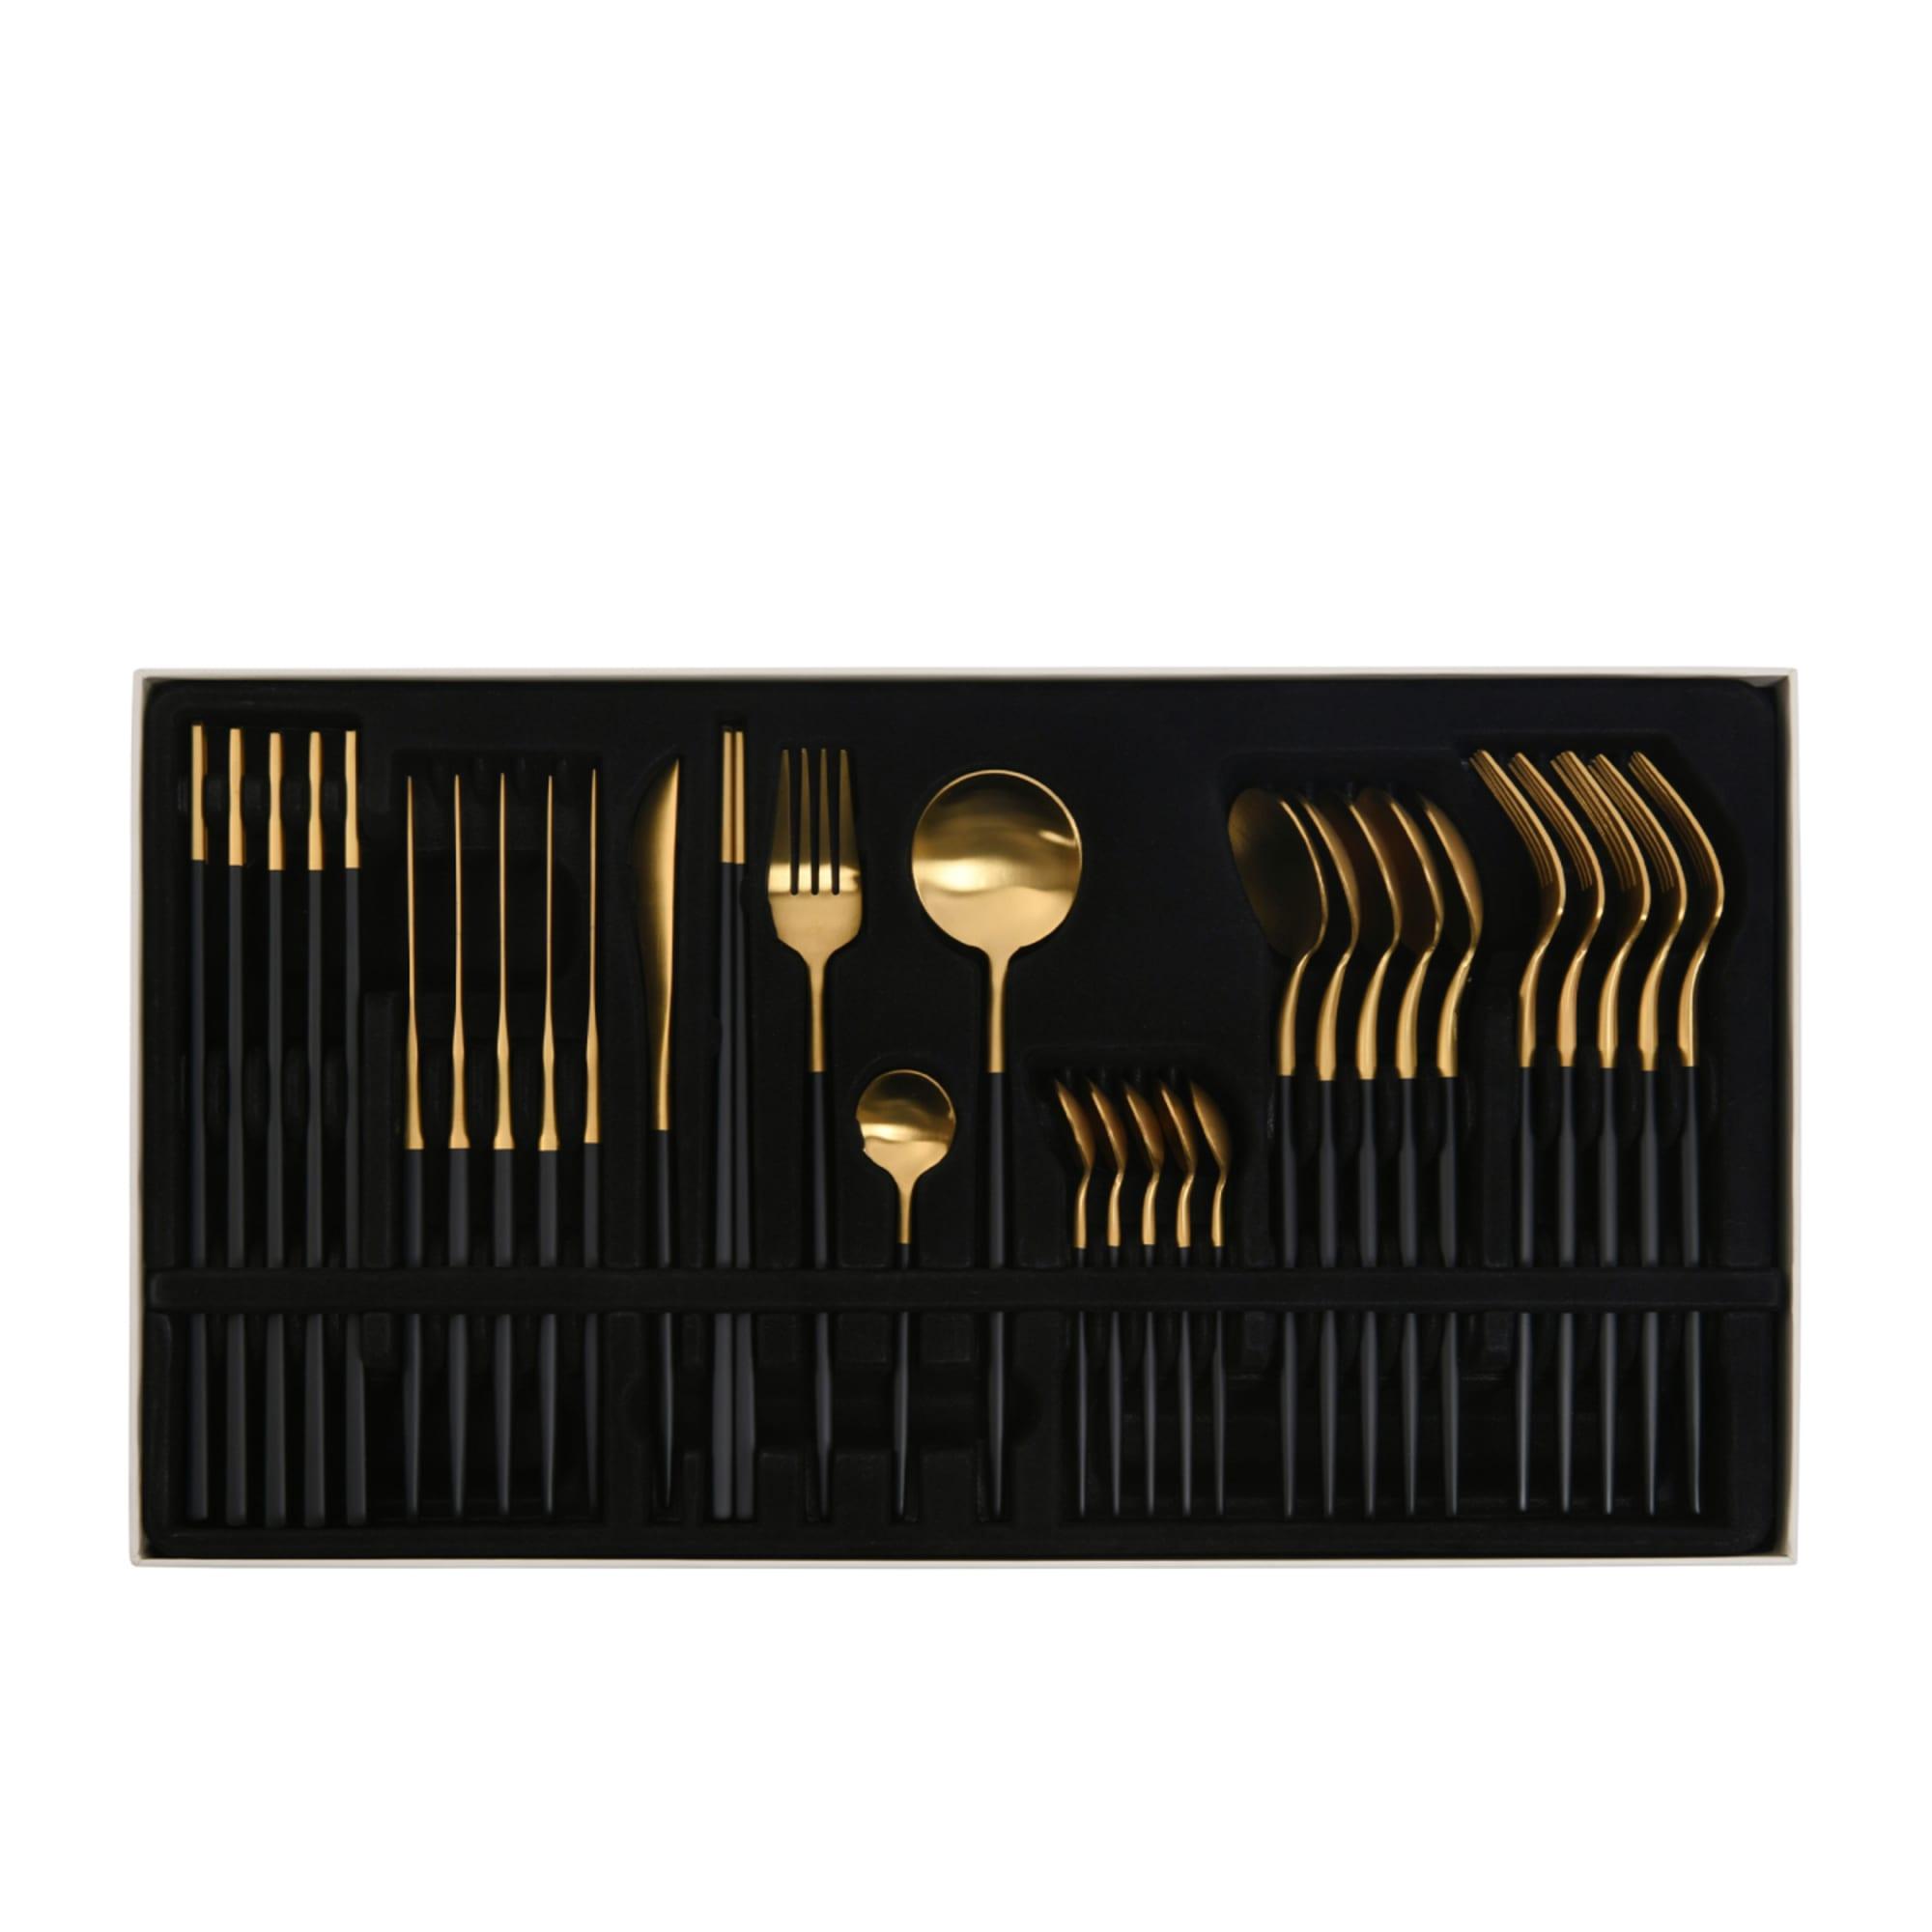 Cadence & Co. Hemingway Cutlery and Chopstick Set 30pc Black Image 1